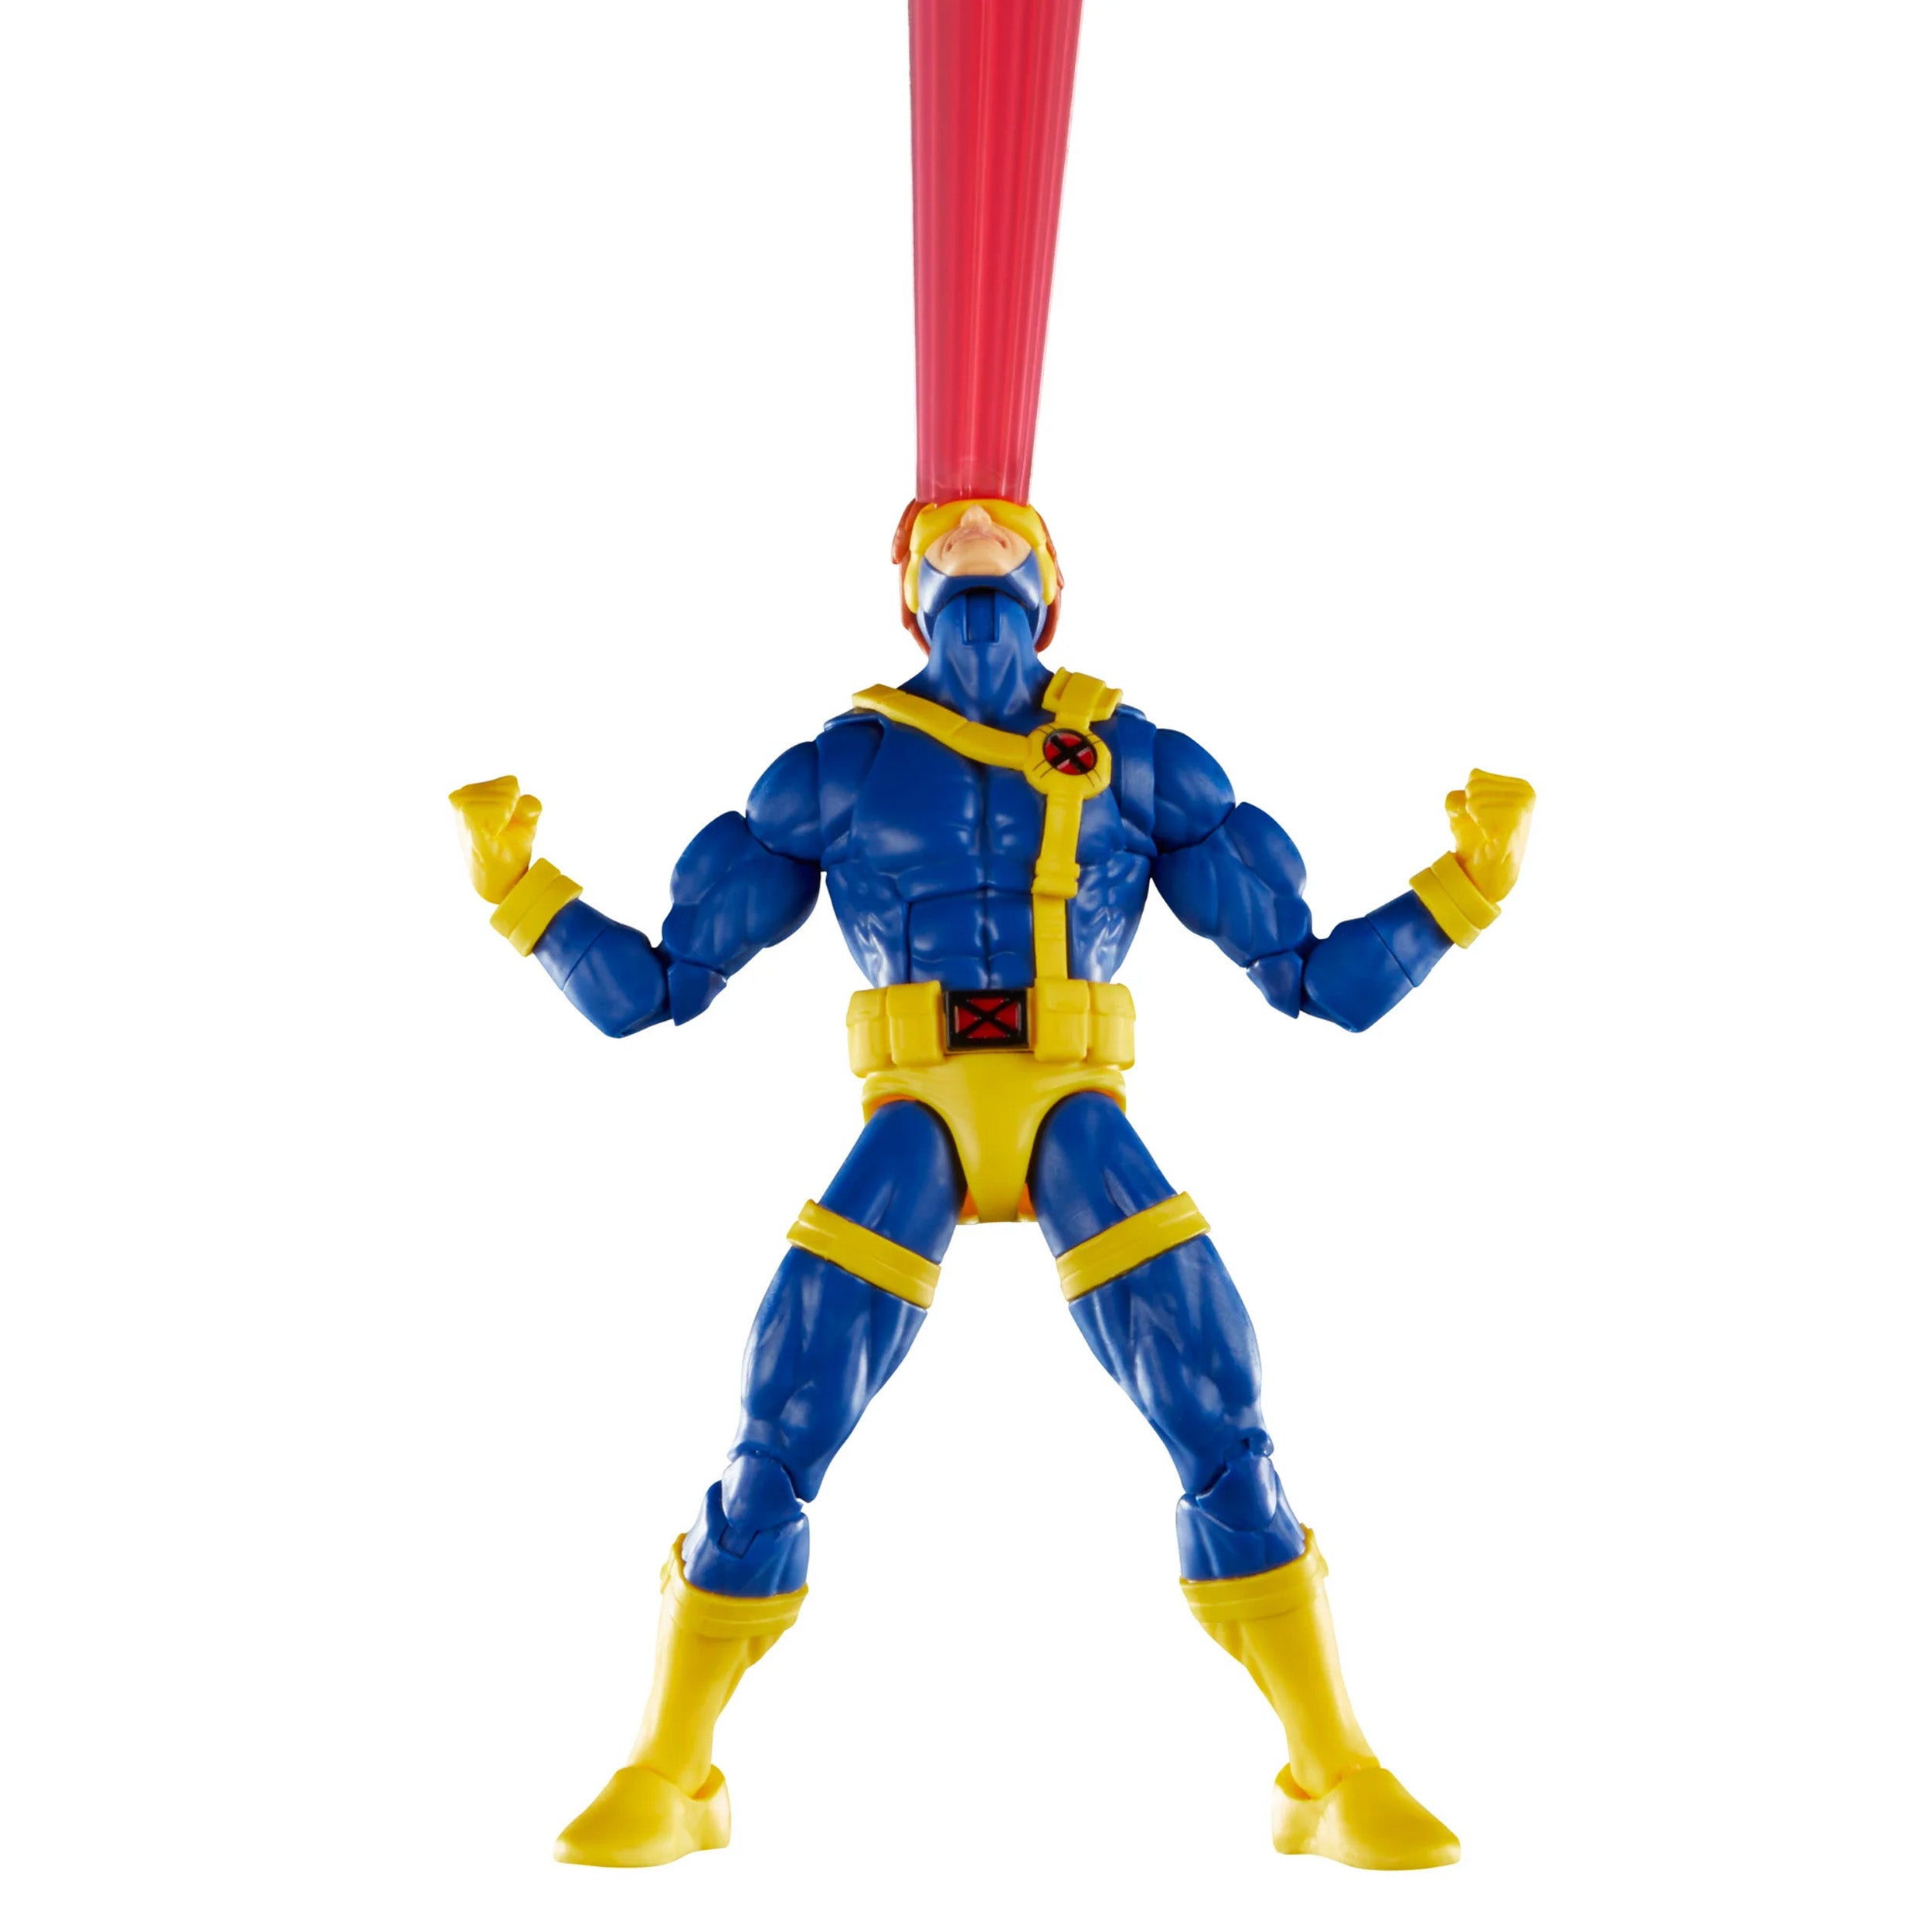 Hasbro - Marvel Legends - Retro Collection - X-Men '97 Cyclops, Goblin Queen, Jean Grey, Magneto, Nightcrawler, The X-cutioner (Carton of 6) (6") - Marvelous Toys